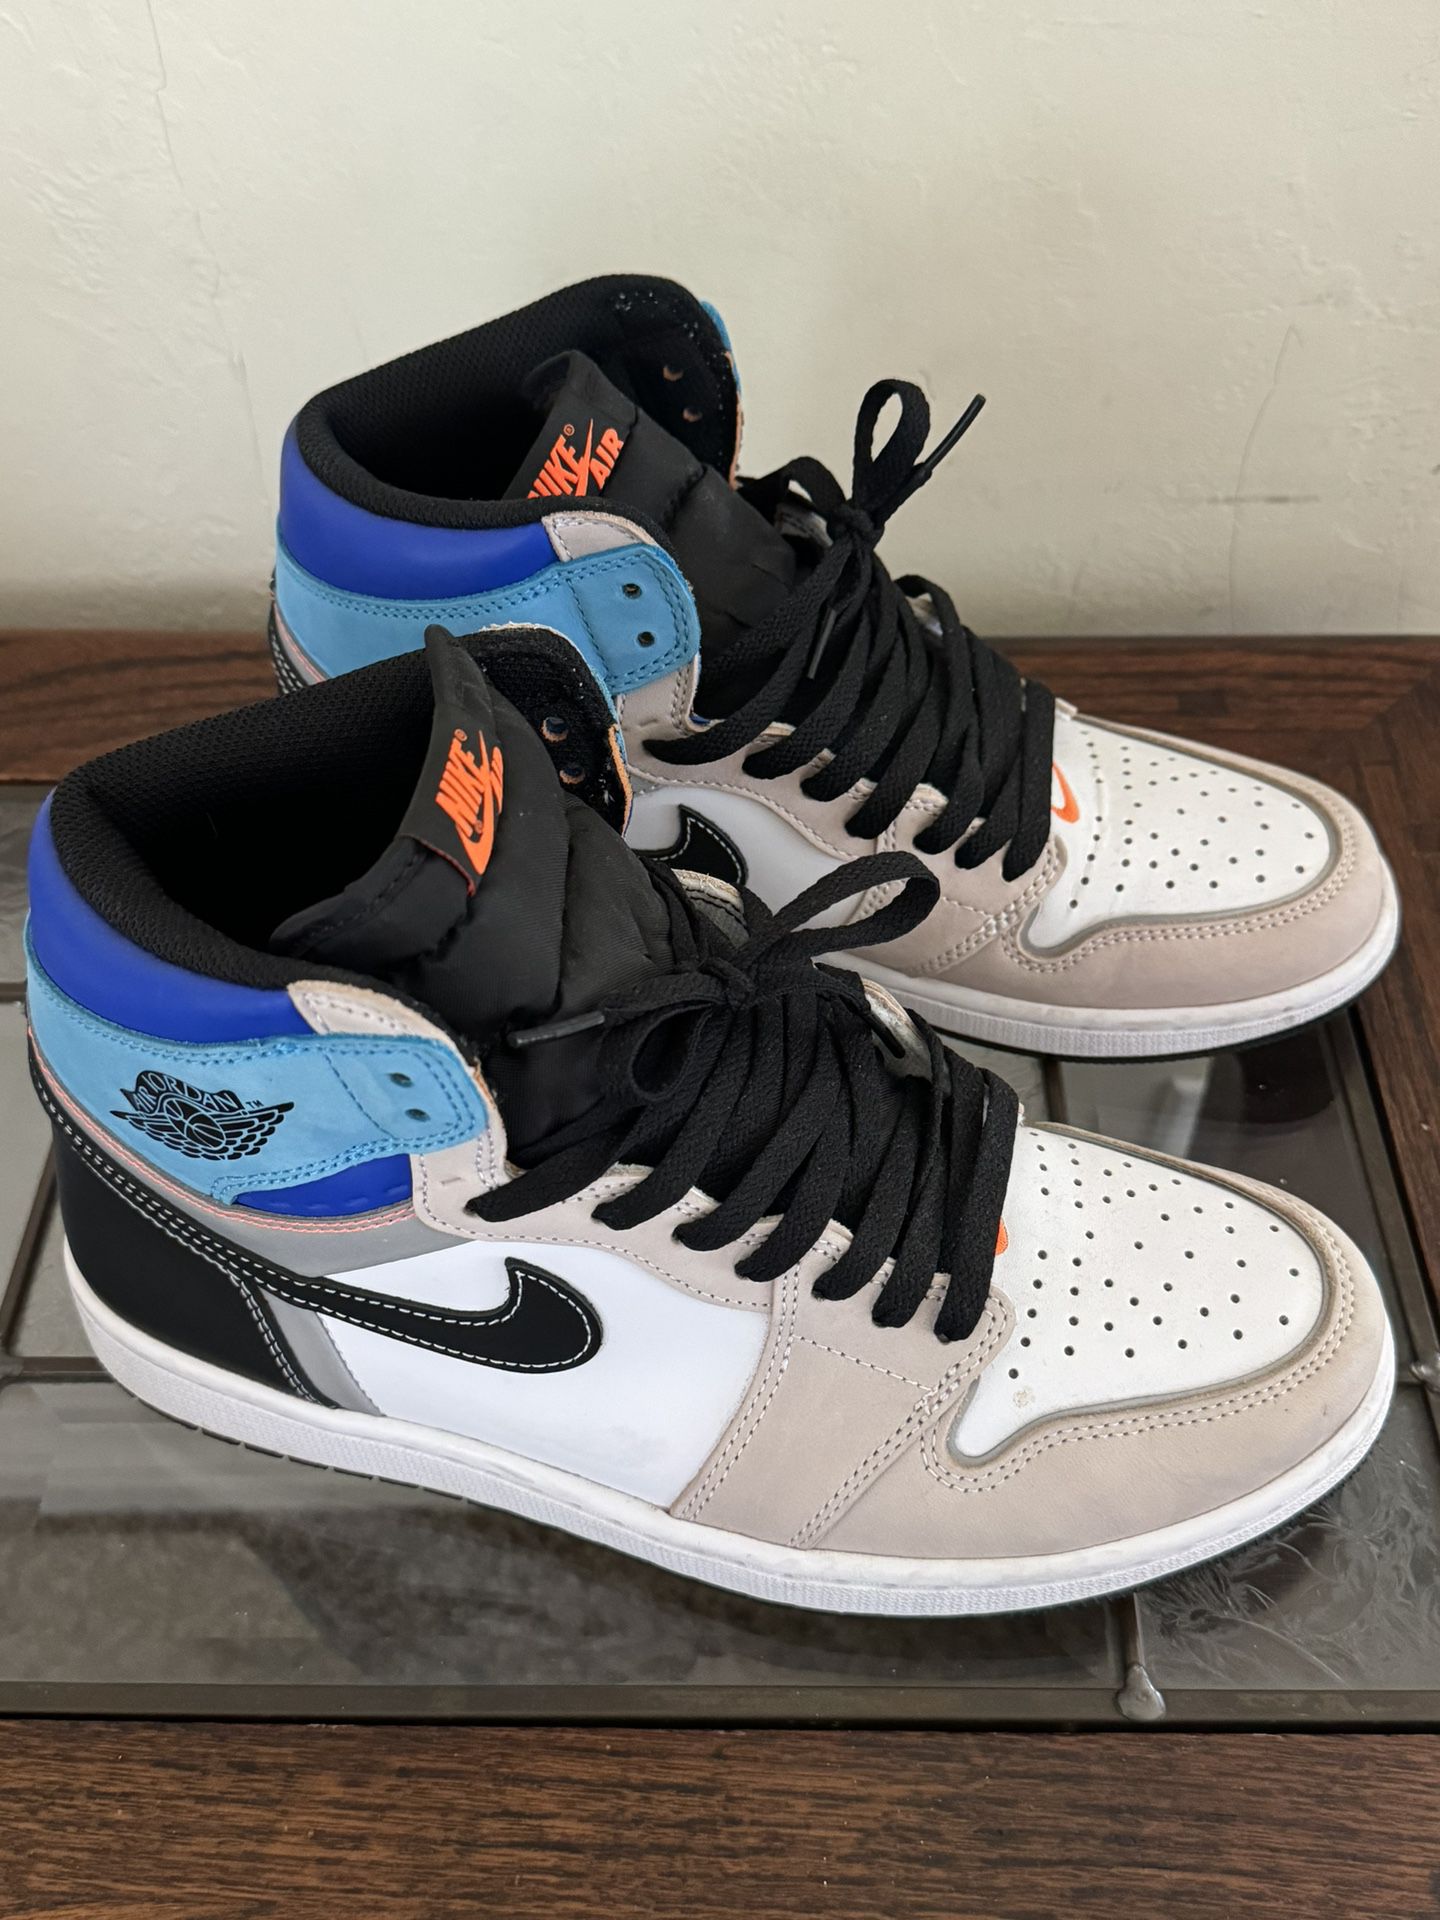 Jordan’s Nike